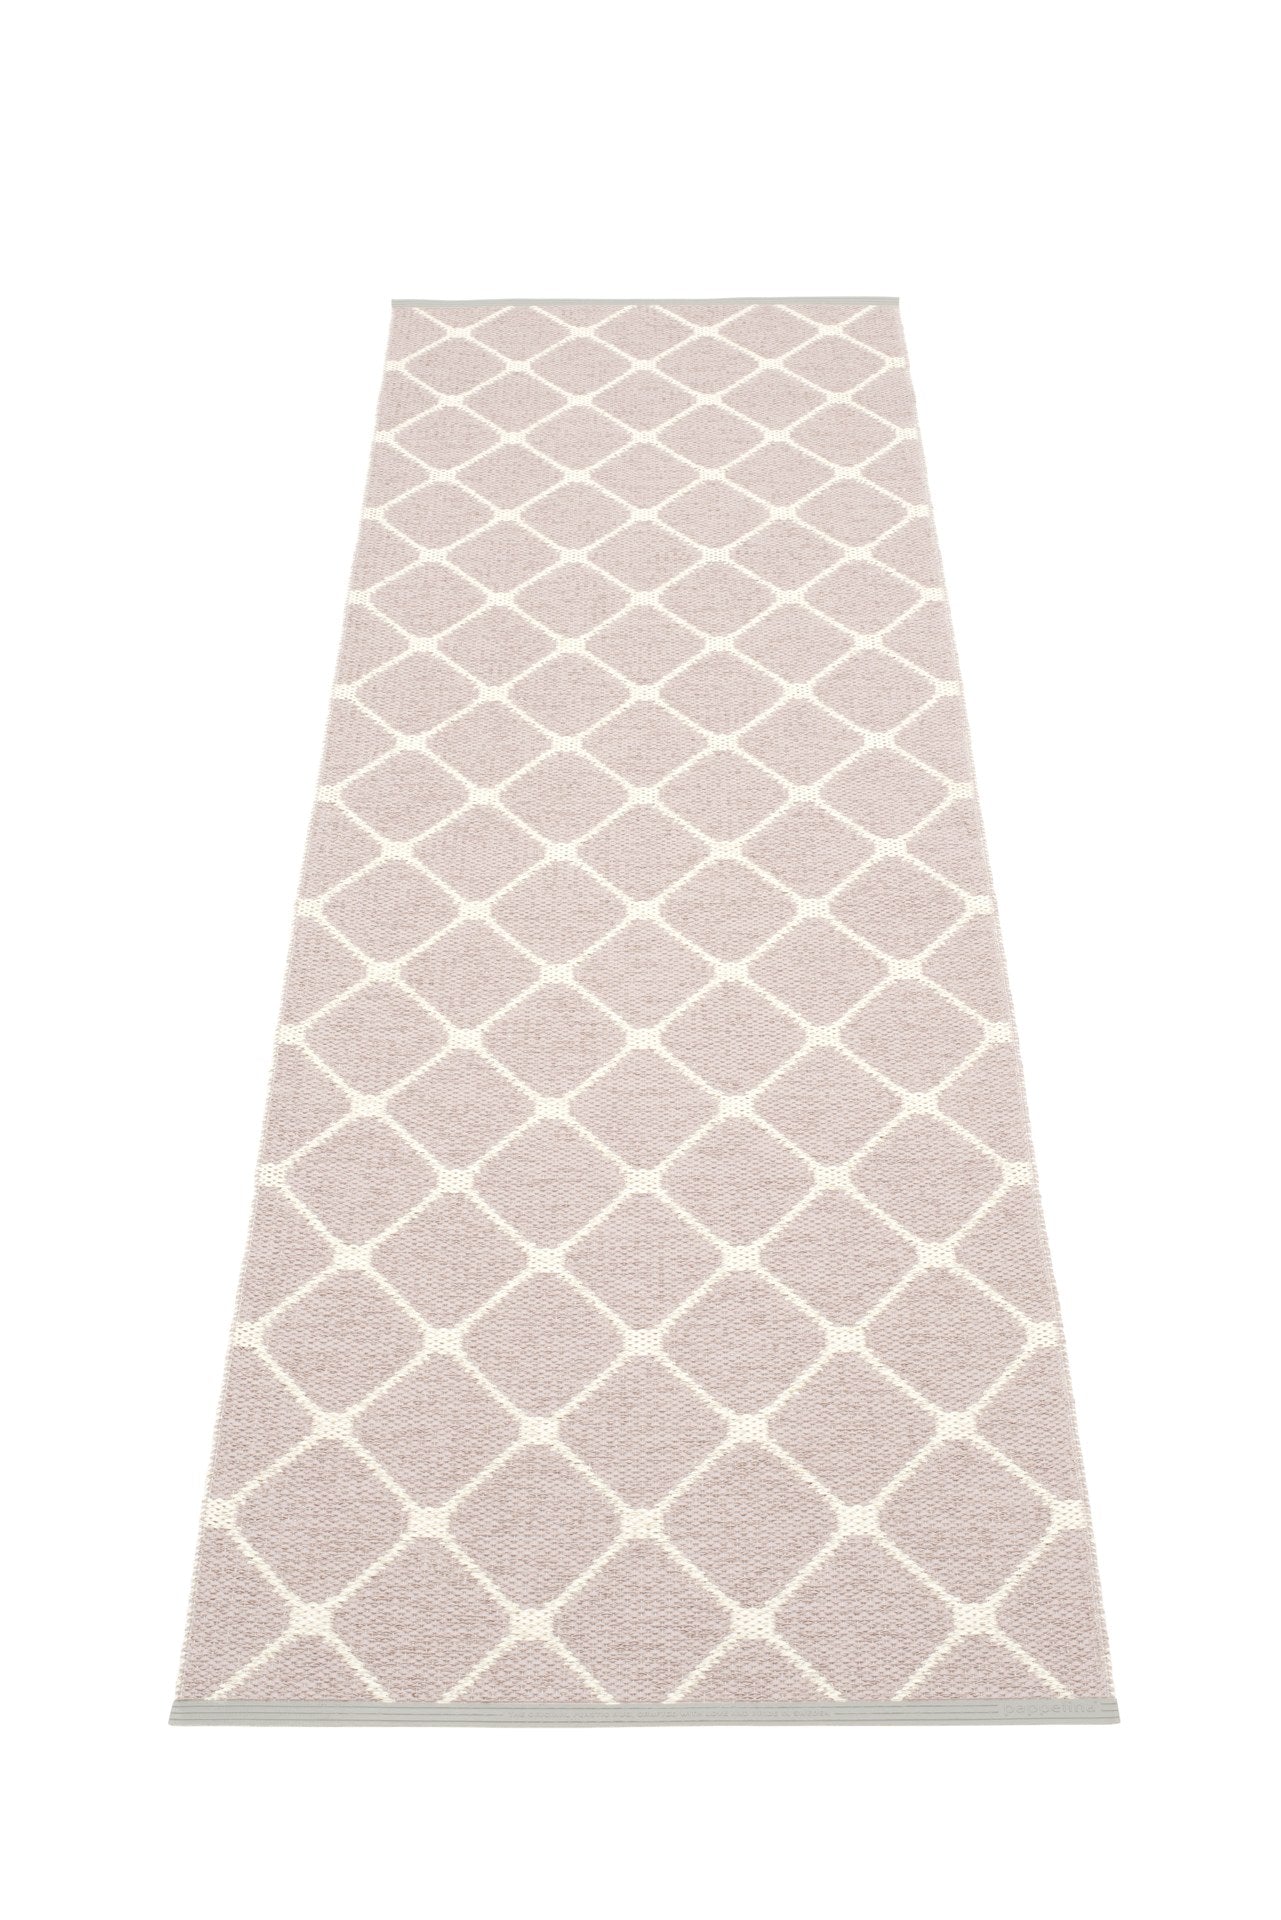 Pappelina Rex matto 70x160 pale rose - Laatukaluste